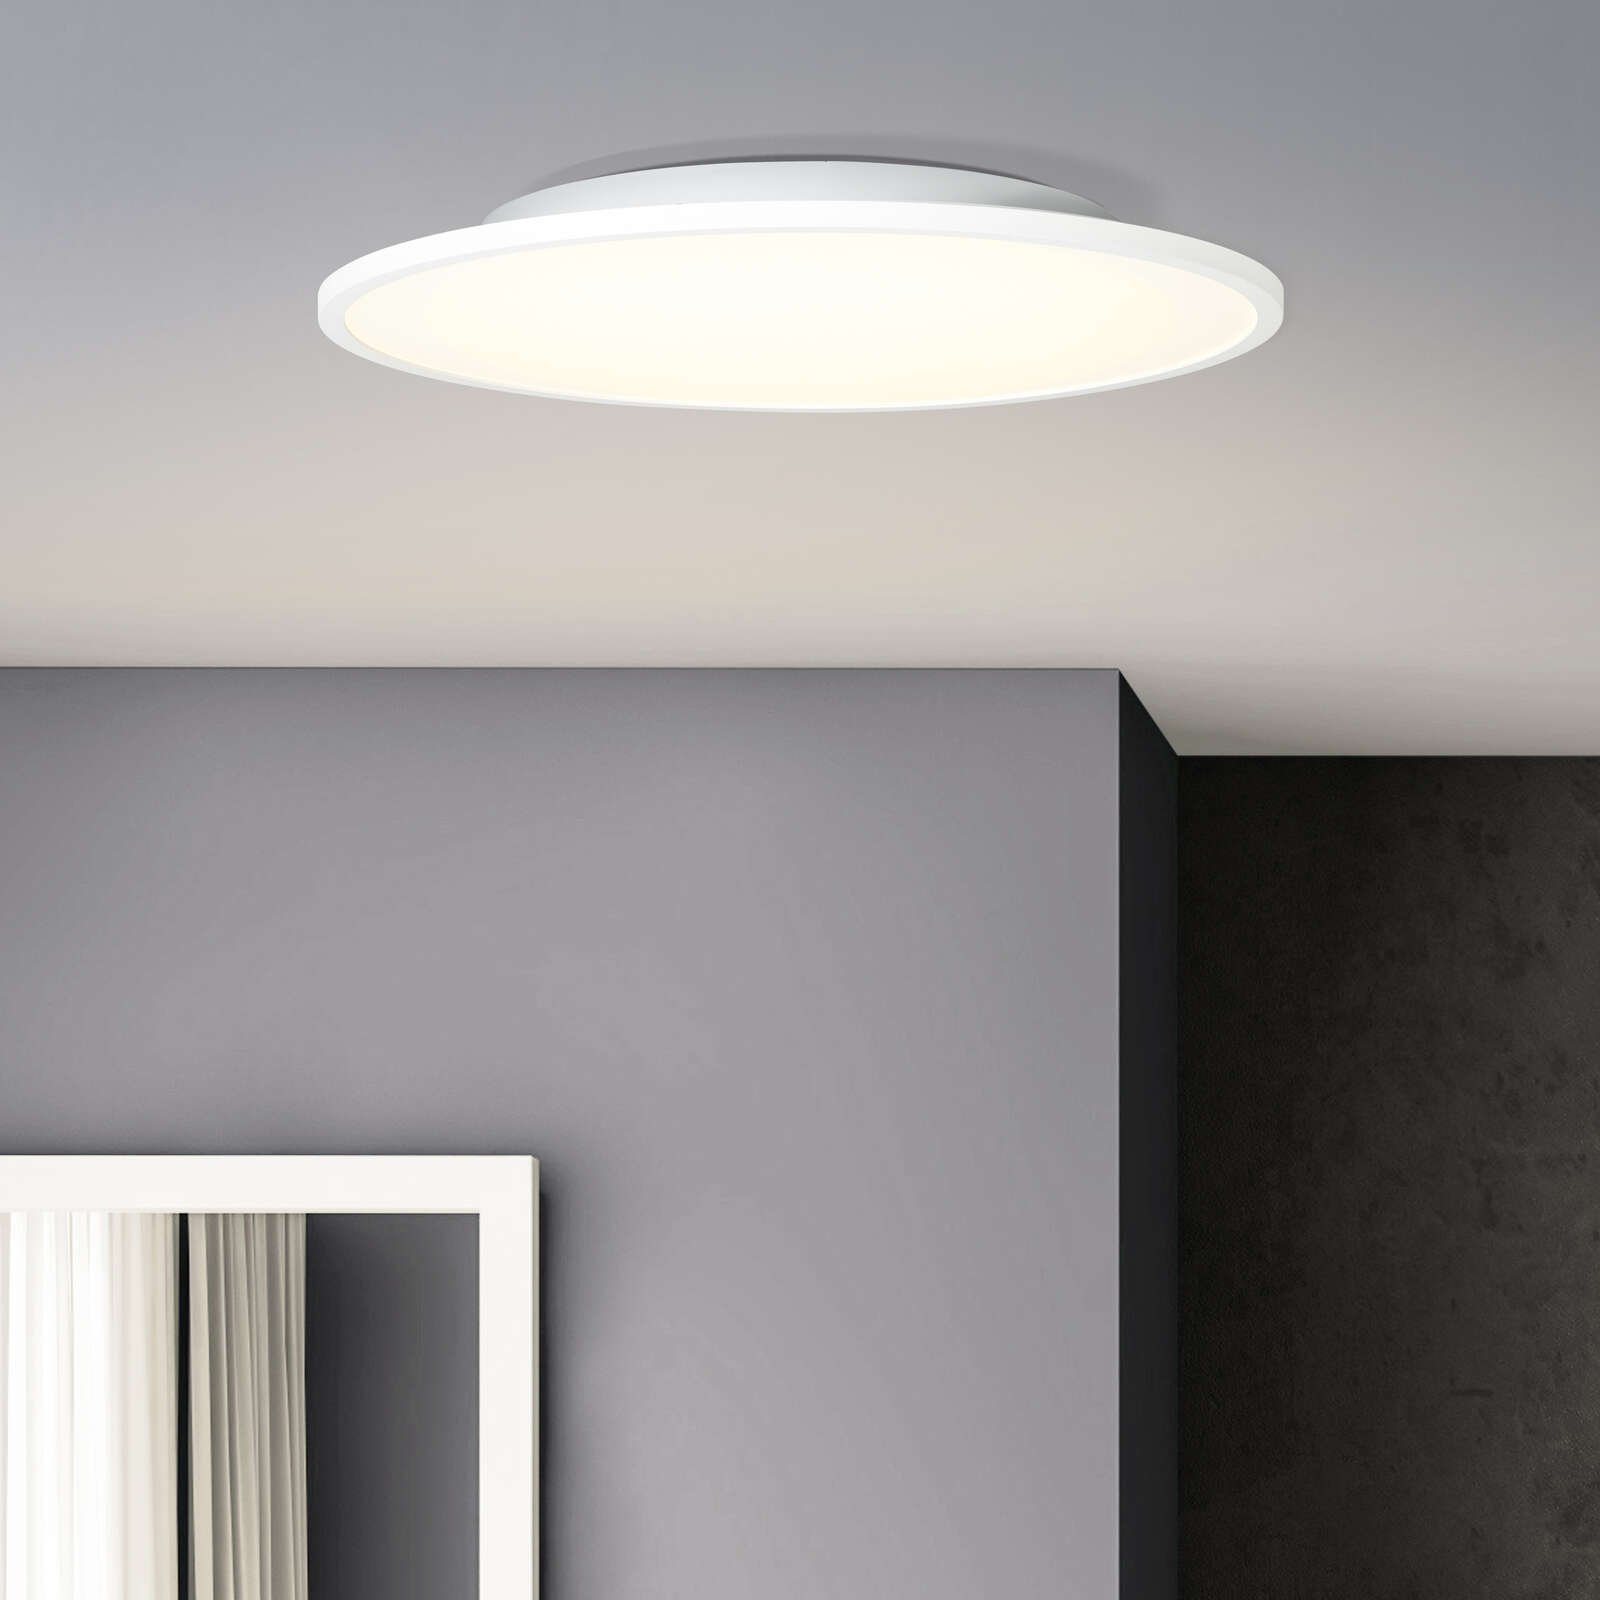             Plastic ceiling light - Constantin 6 - White
        